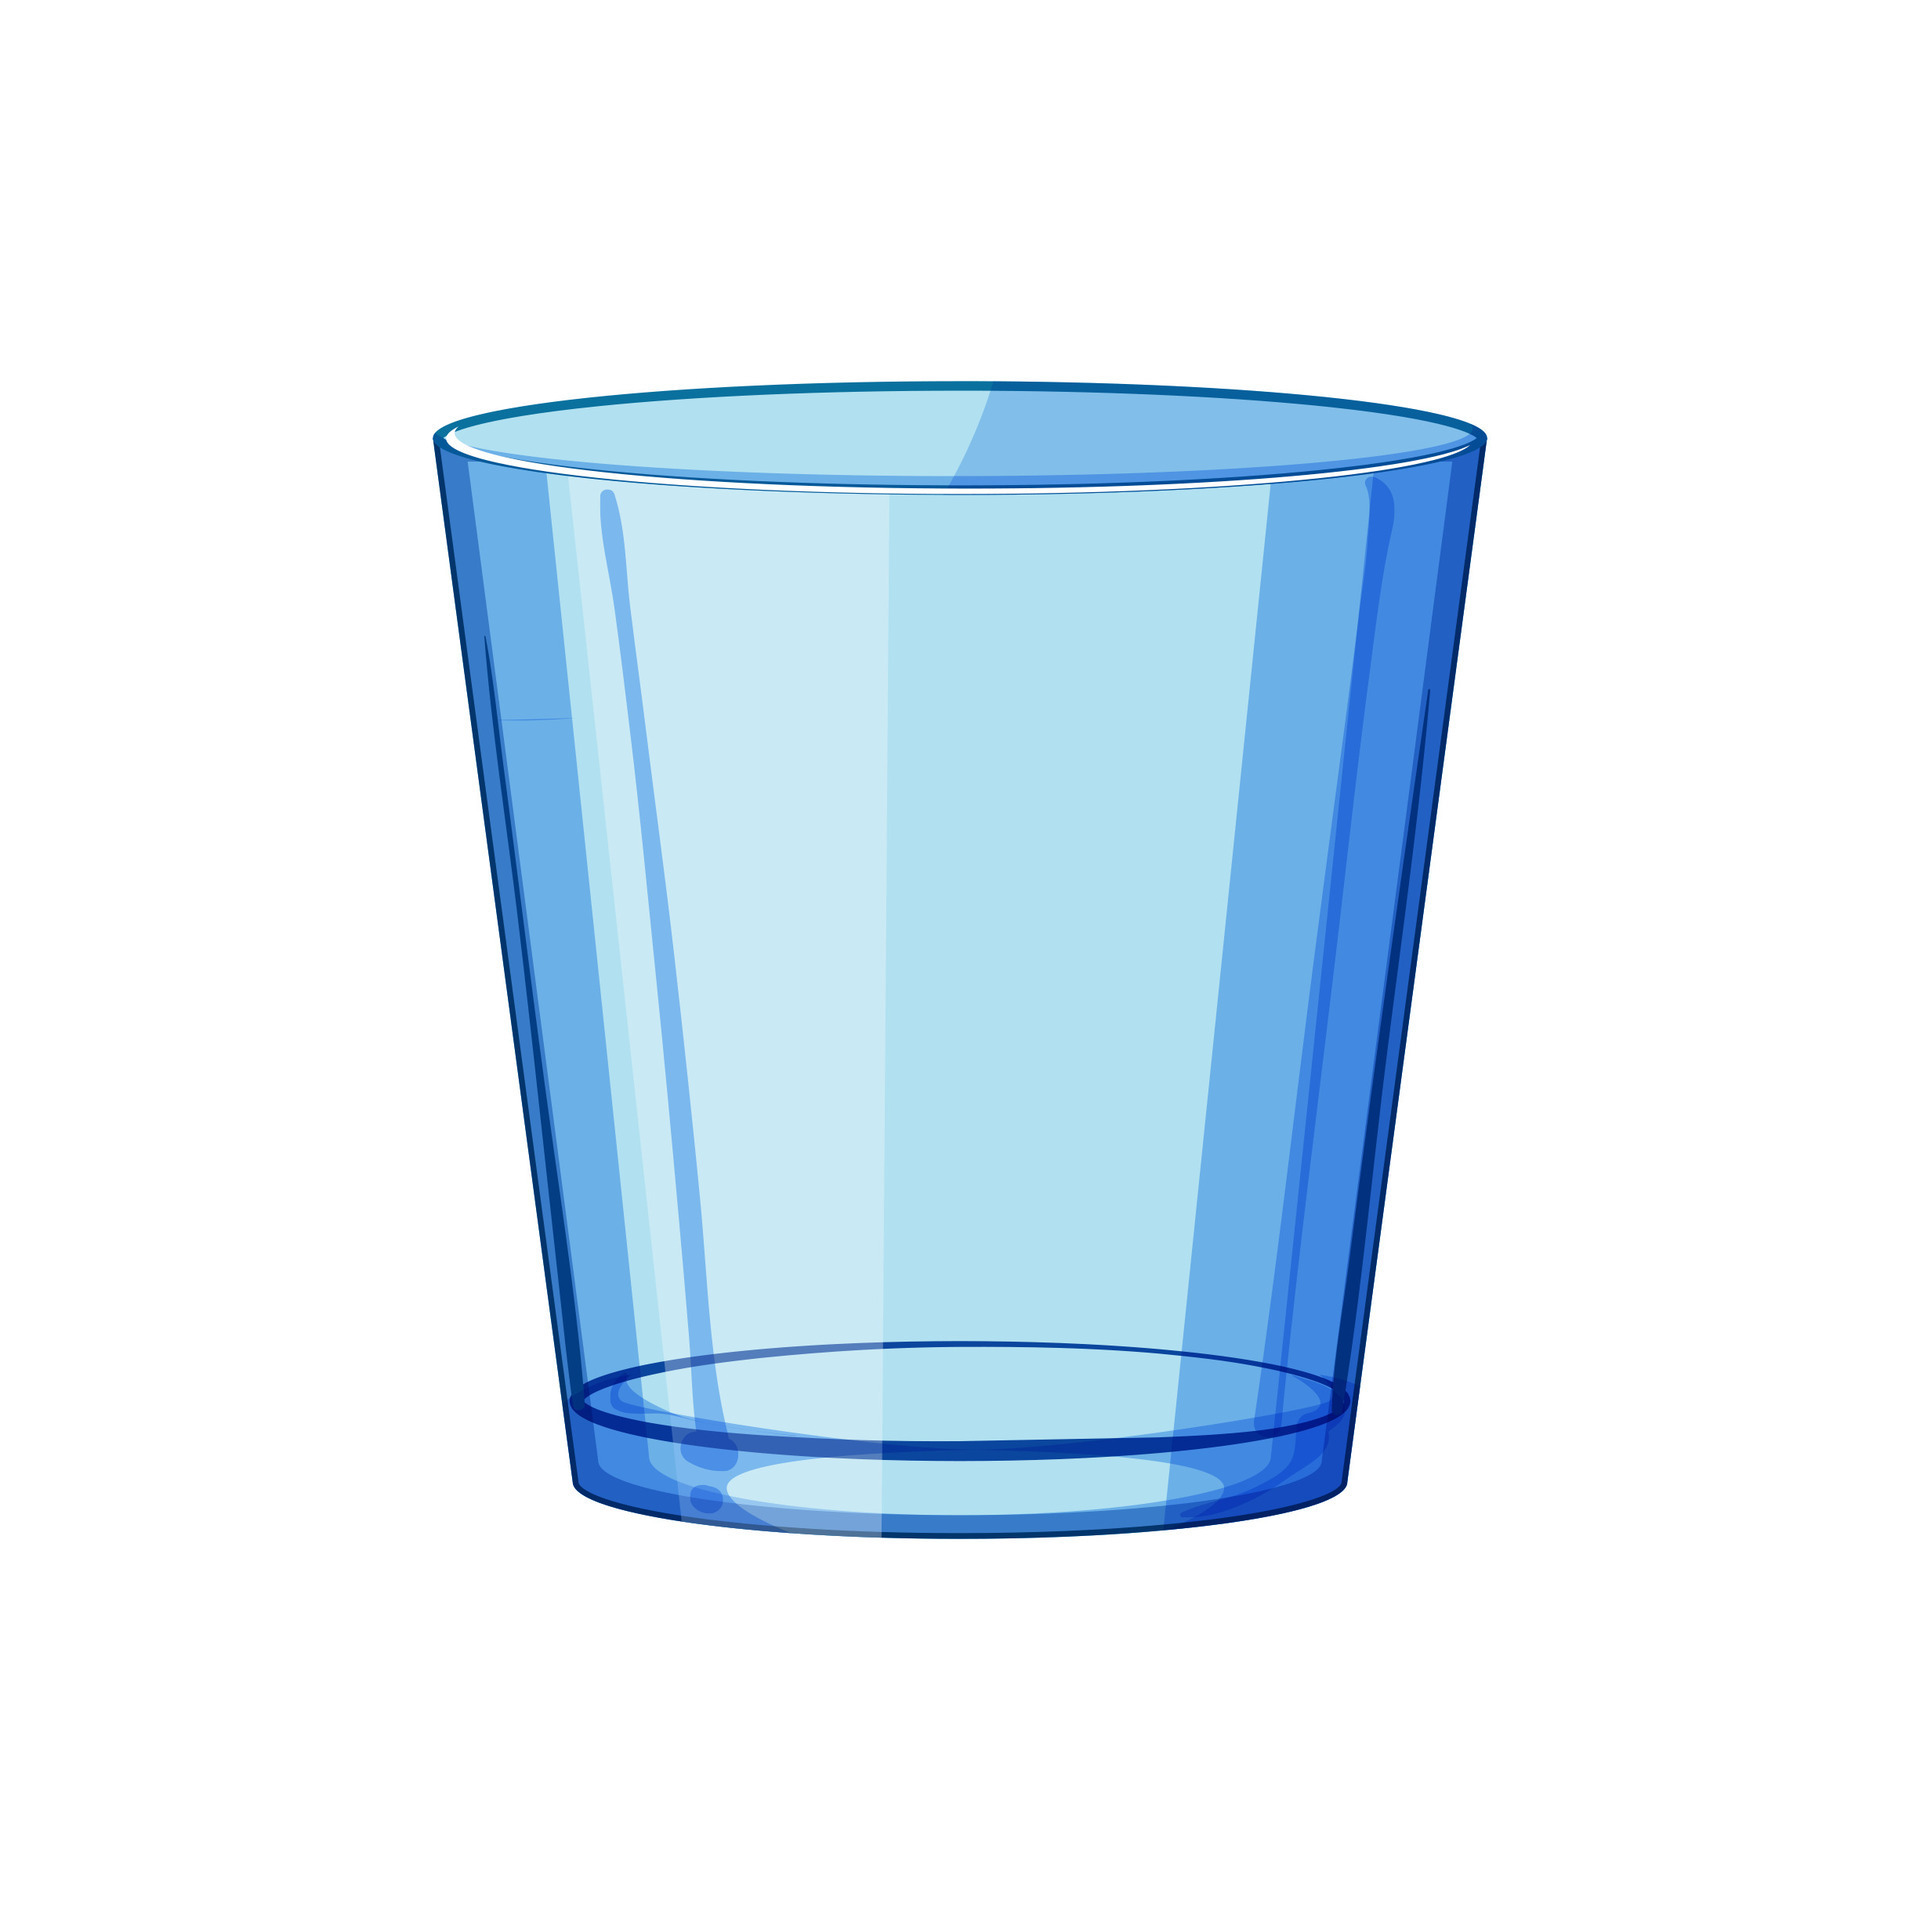 transparent glass cup cartoon vector illustration 26114069 Vector